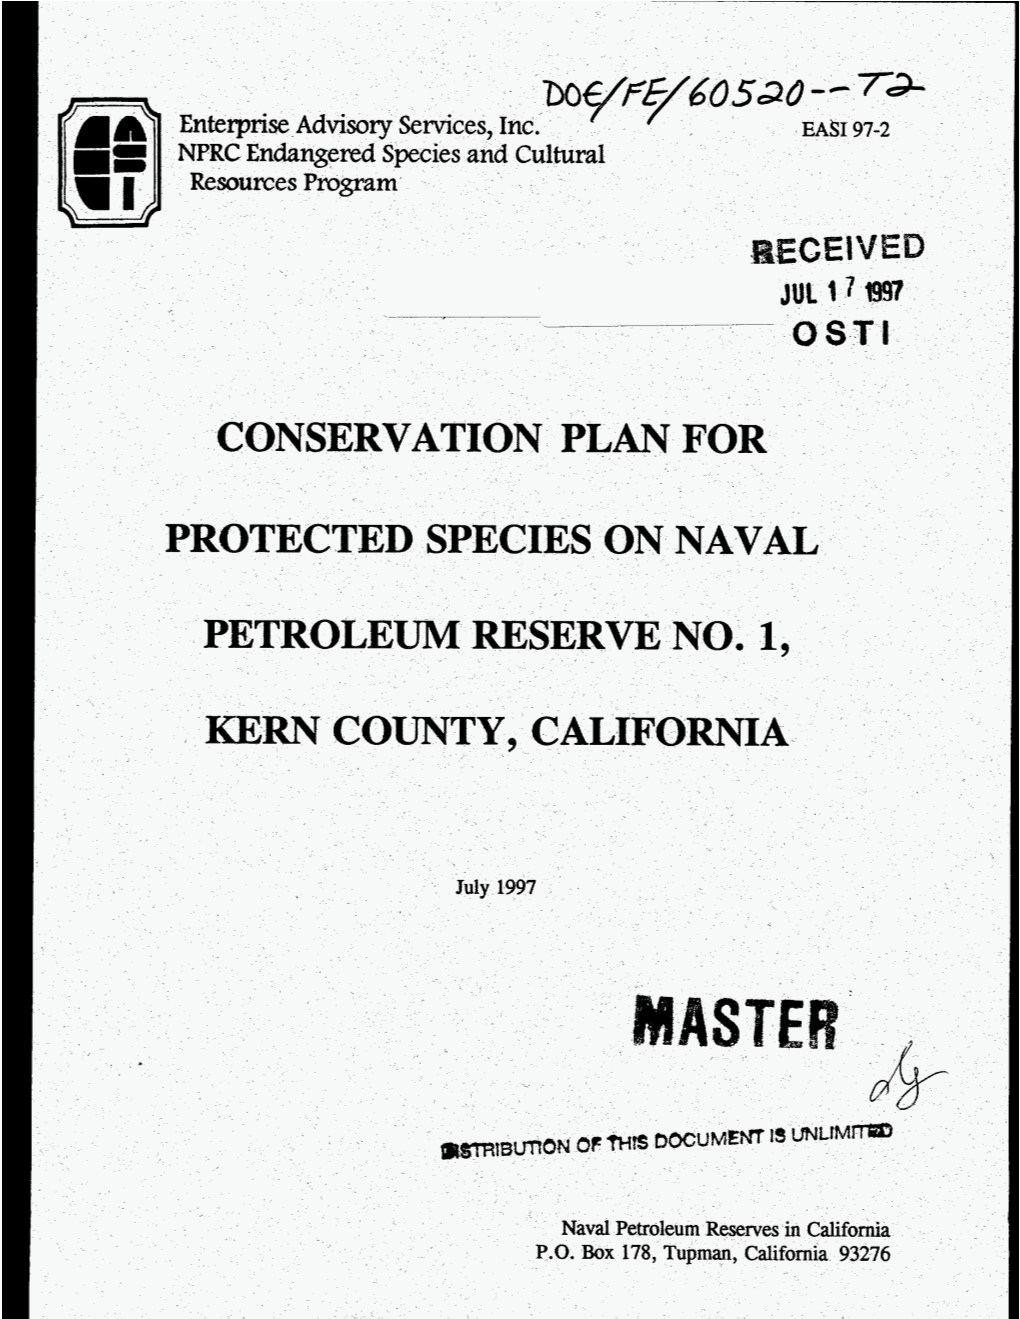 CONSERVATION PLAN for PROTE SPECIES on NAVAL PETROLEUM RESERVE NO. 1, KERN Corn CALIF